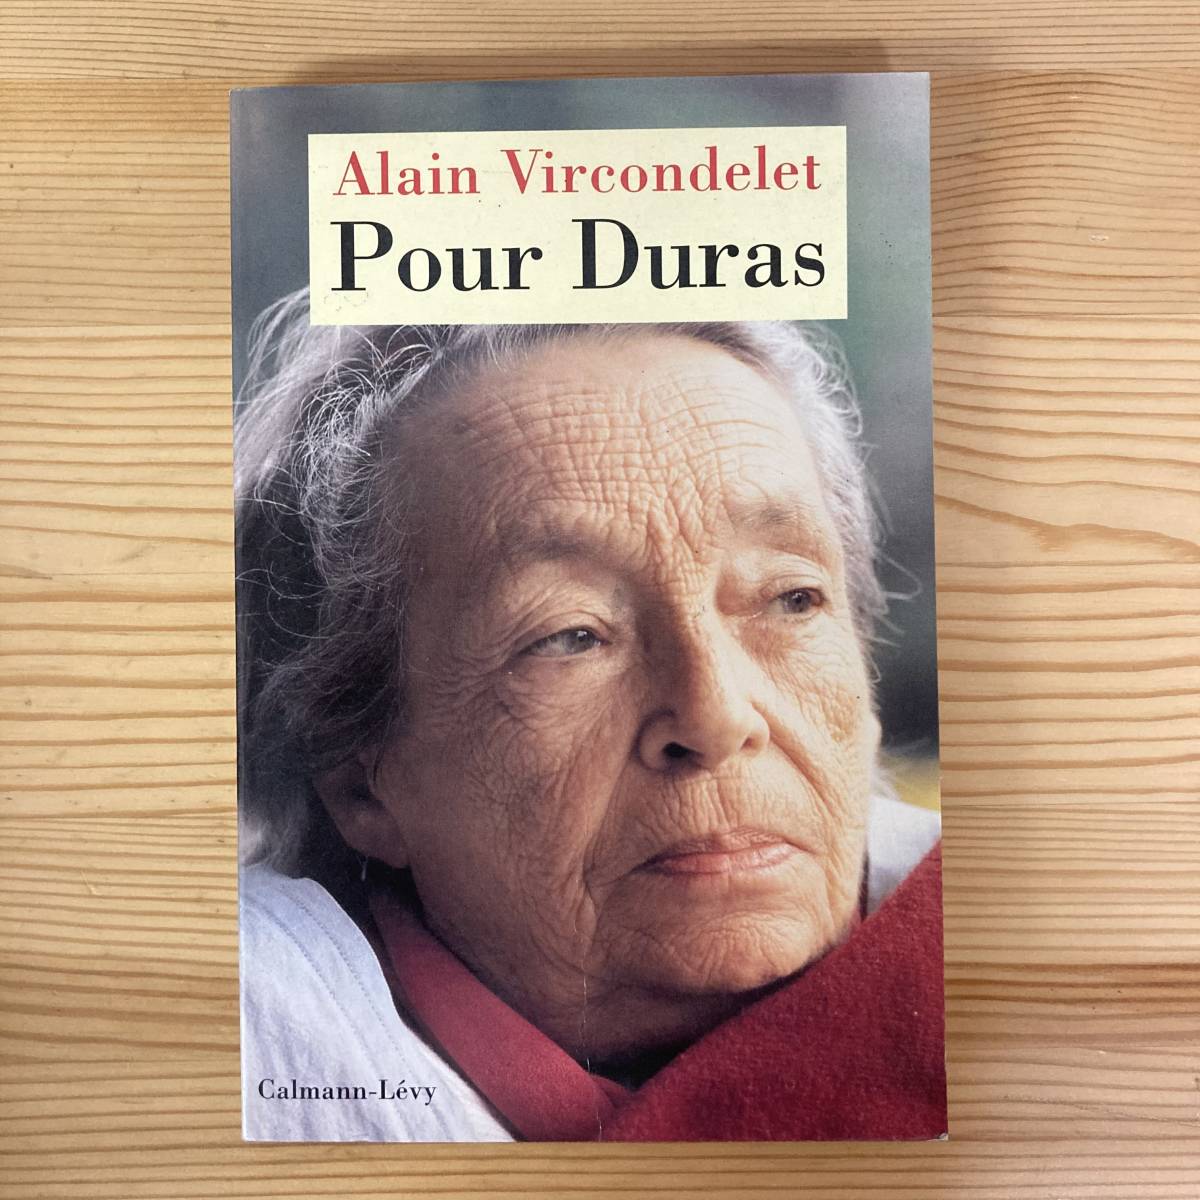 [. language foreign book ]Pour Duras / Alain Vircondelet( work )[ maru Gris to* Duras ]